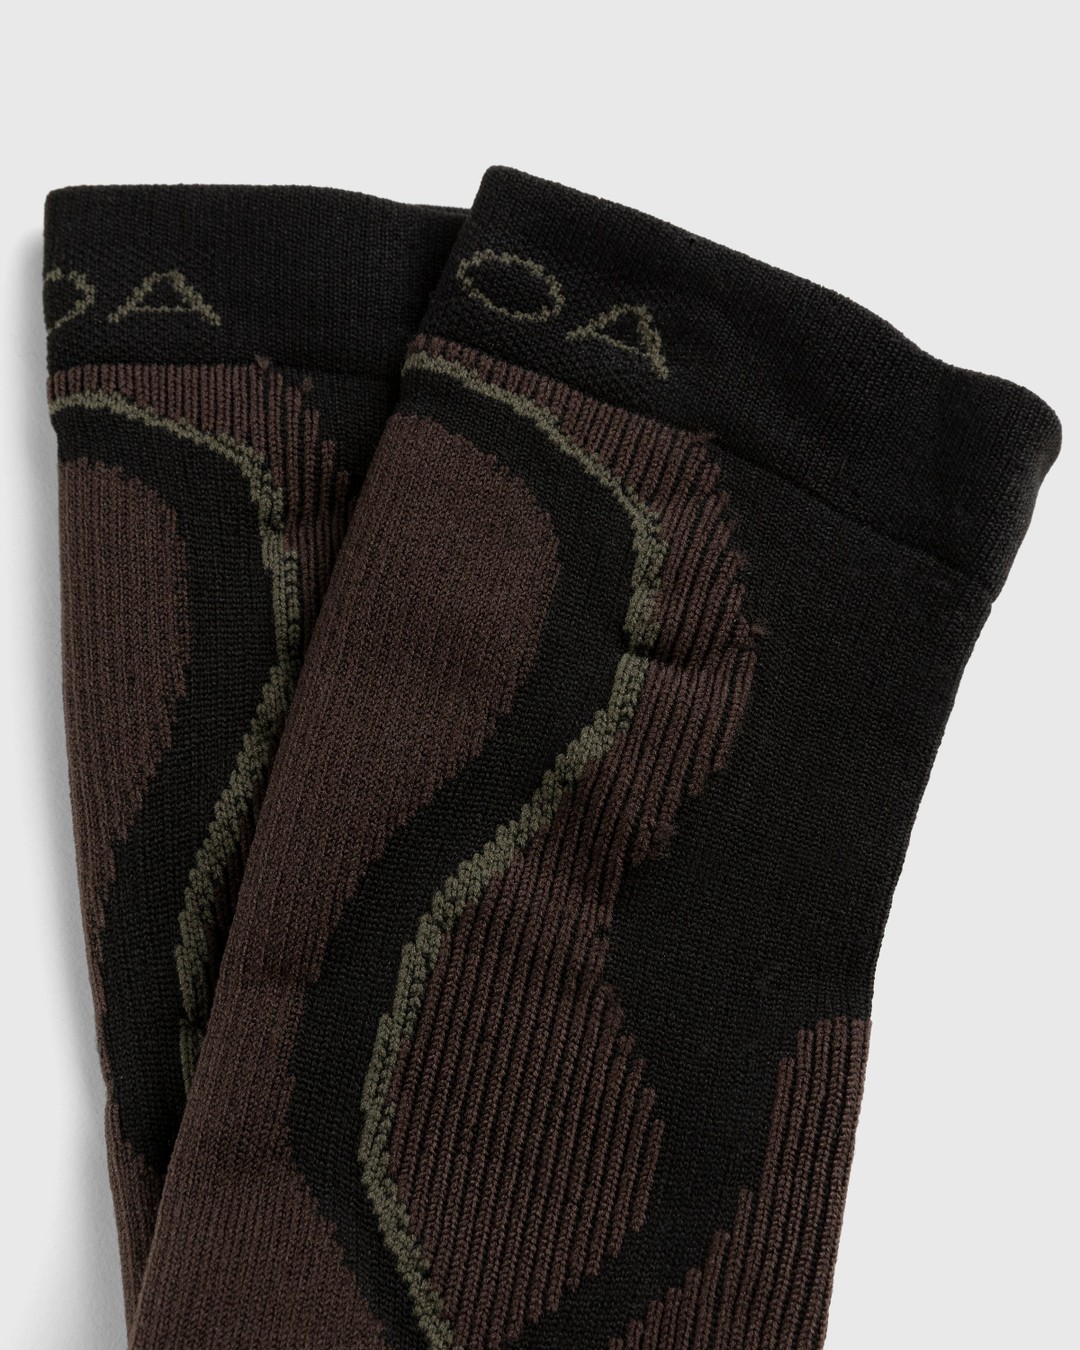 ROA – Mid-Calf Socks Black